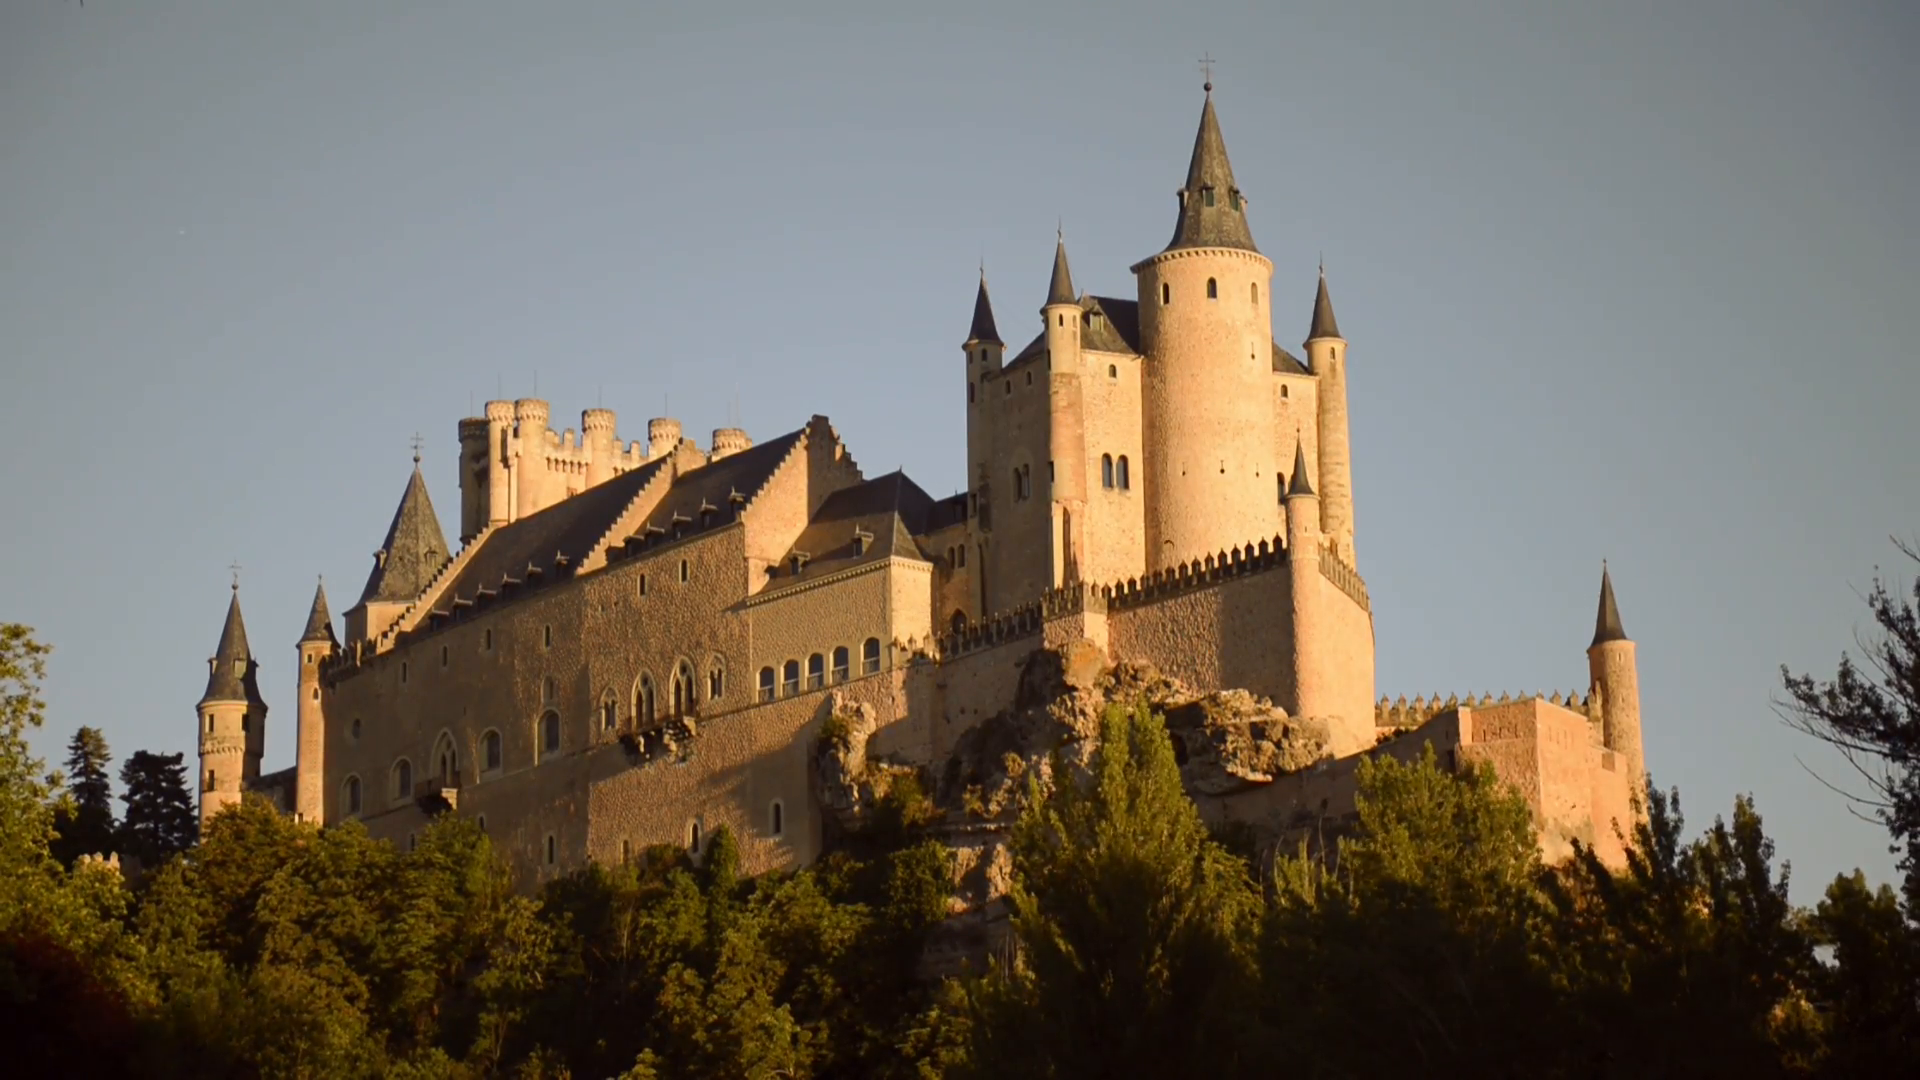 The spanish castle Alcazar of Segovia, in Castilla y Leon, Spain ...